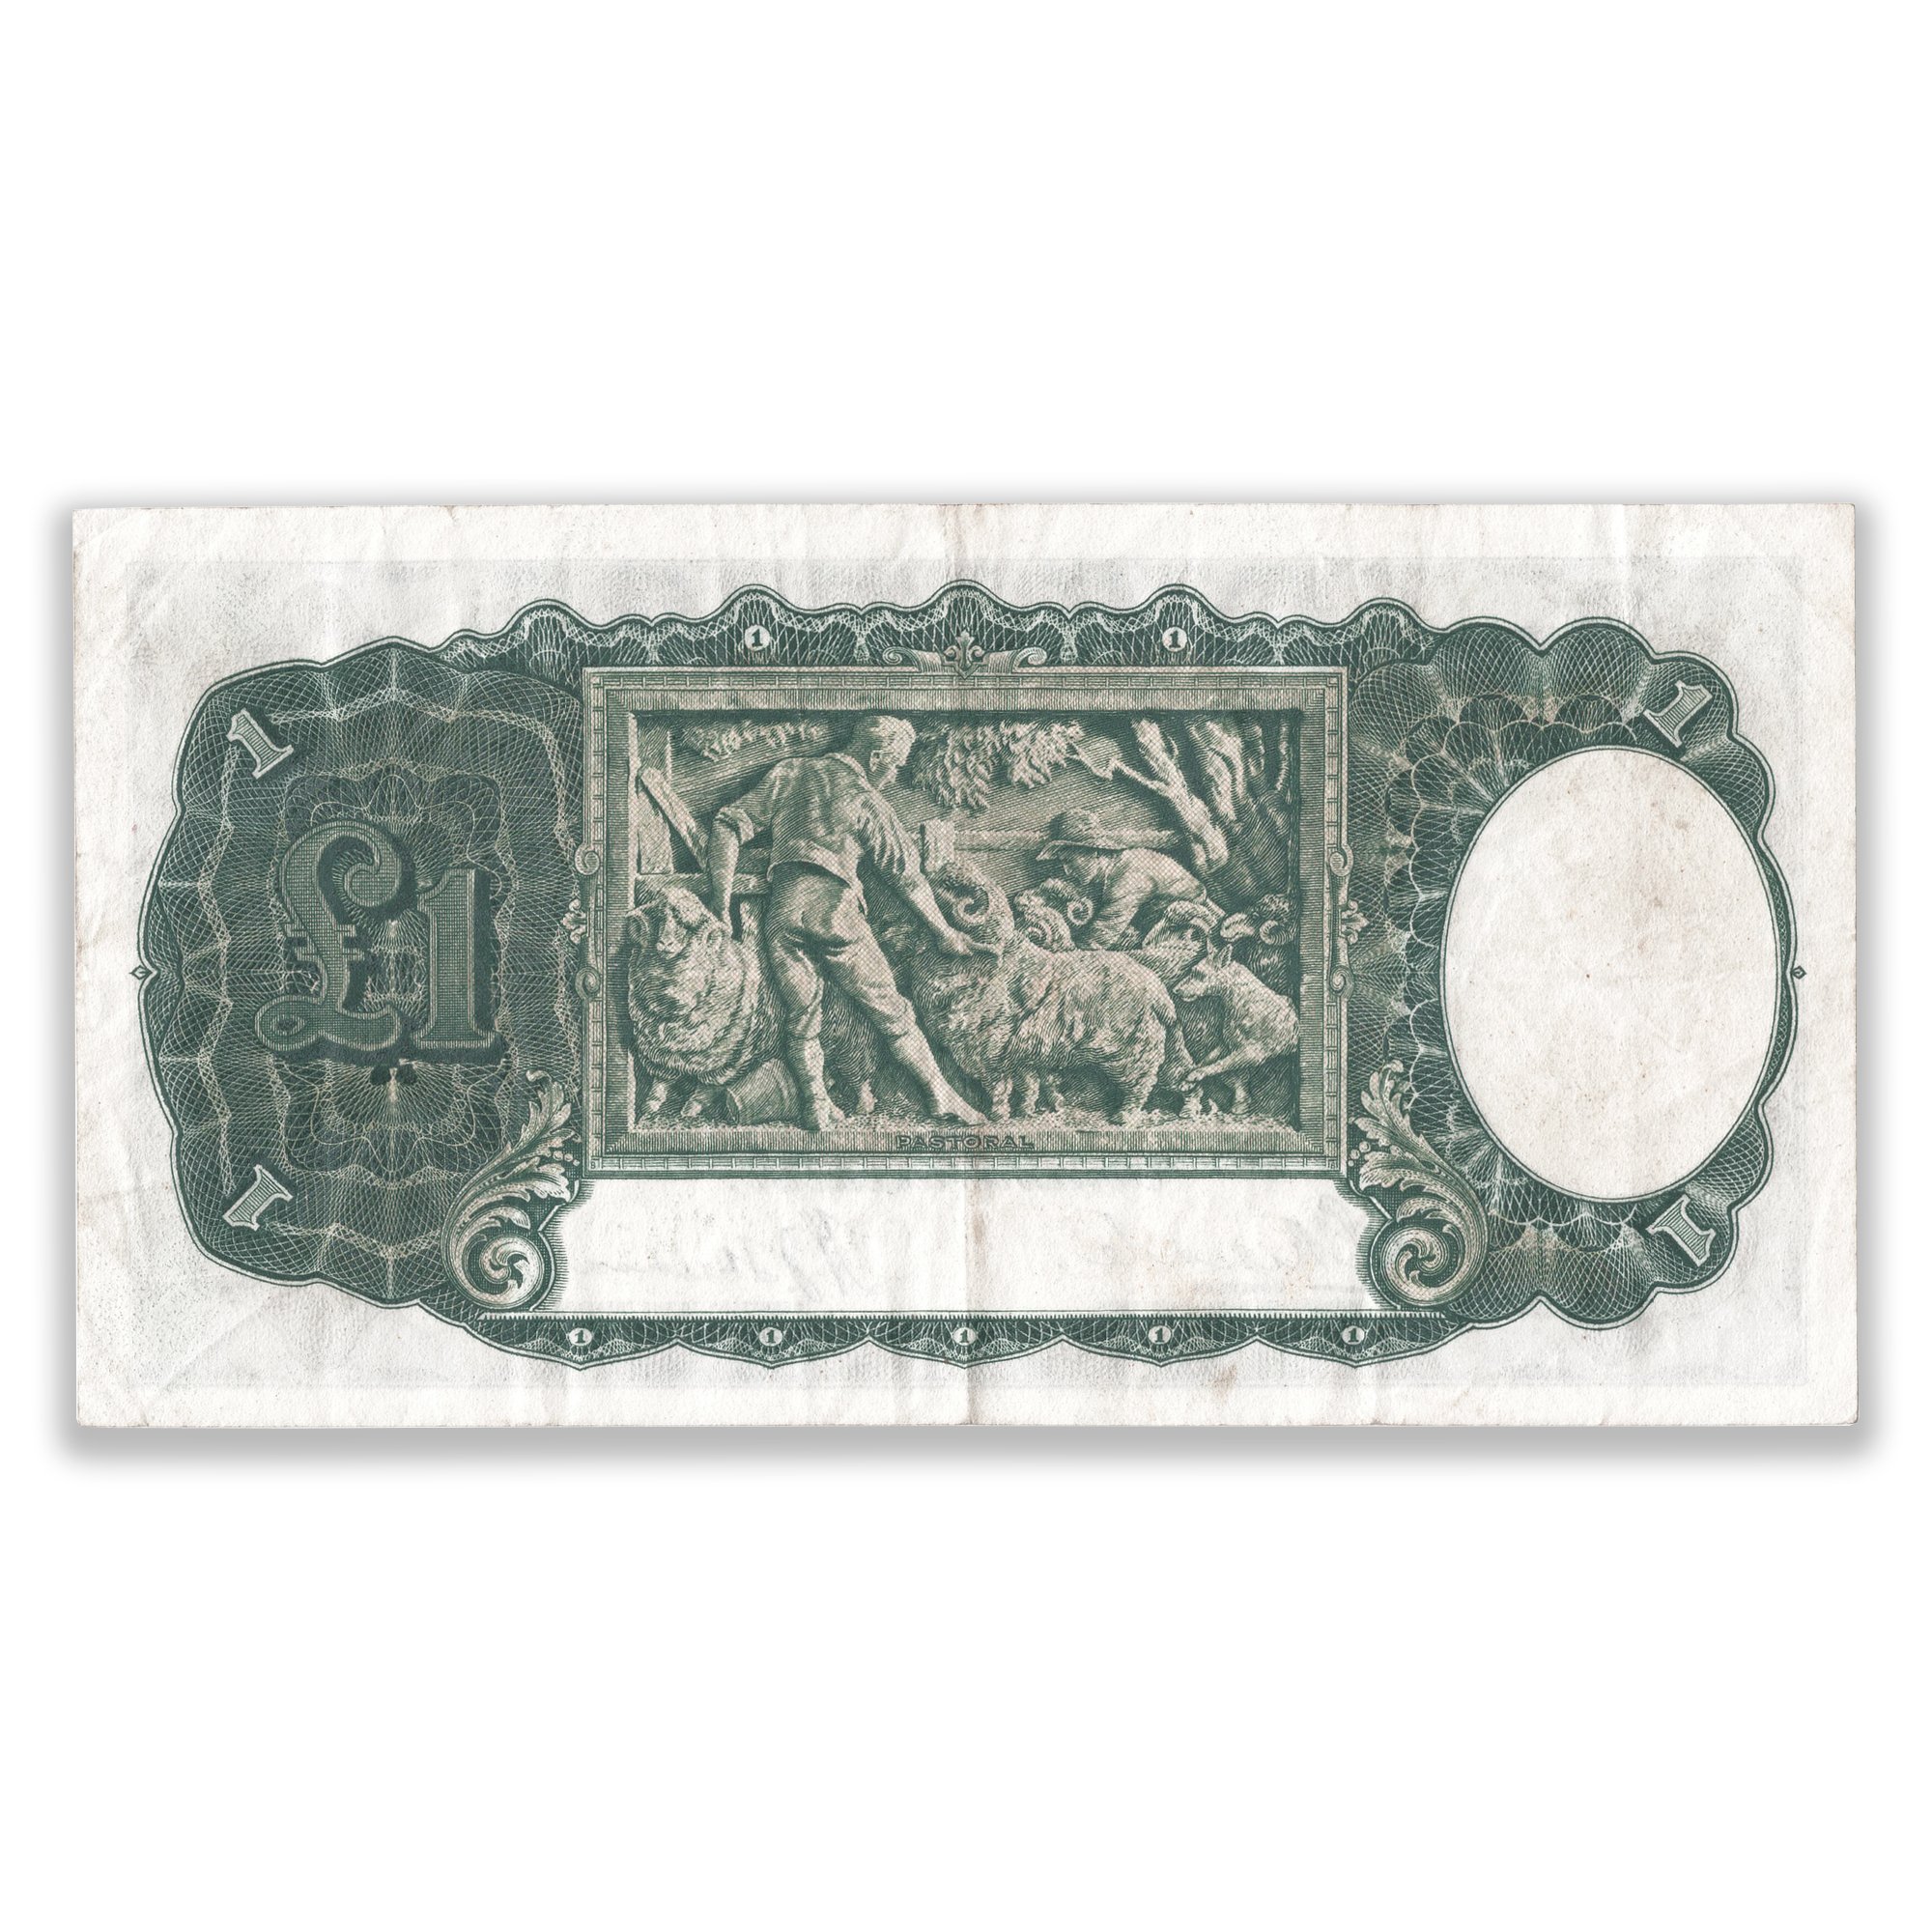 R28 1933 One Pound Banknote Good Very Fine